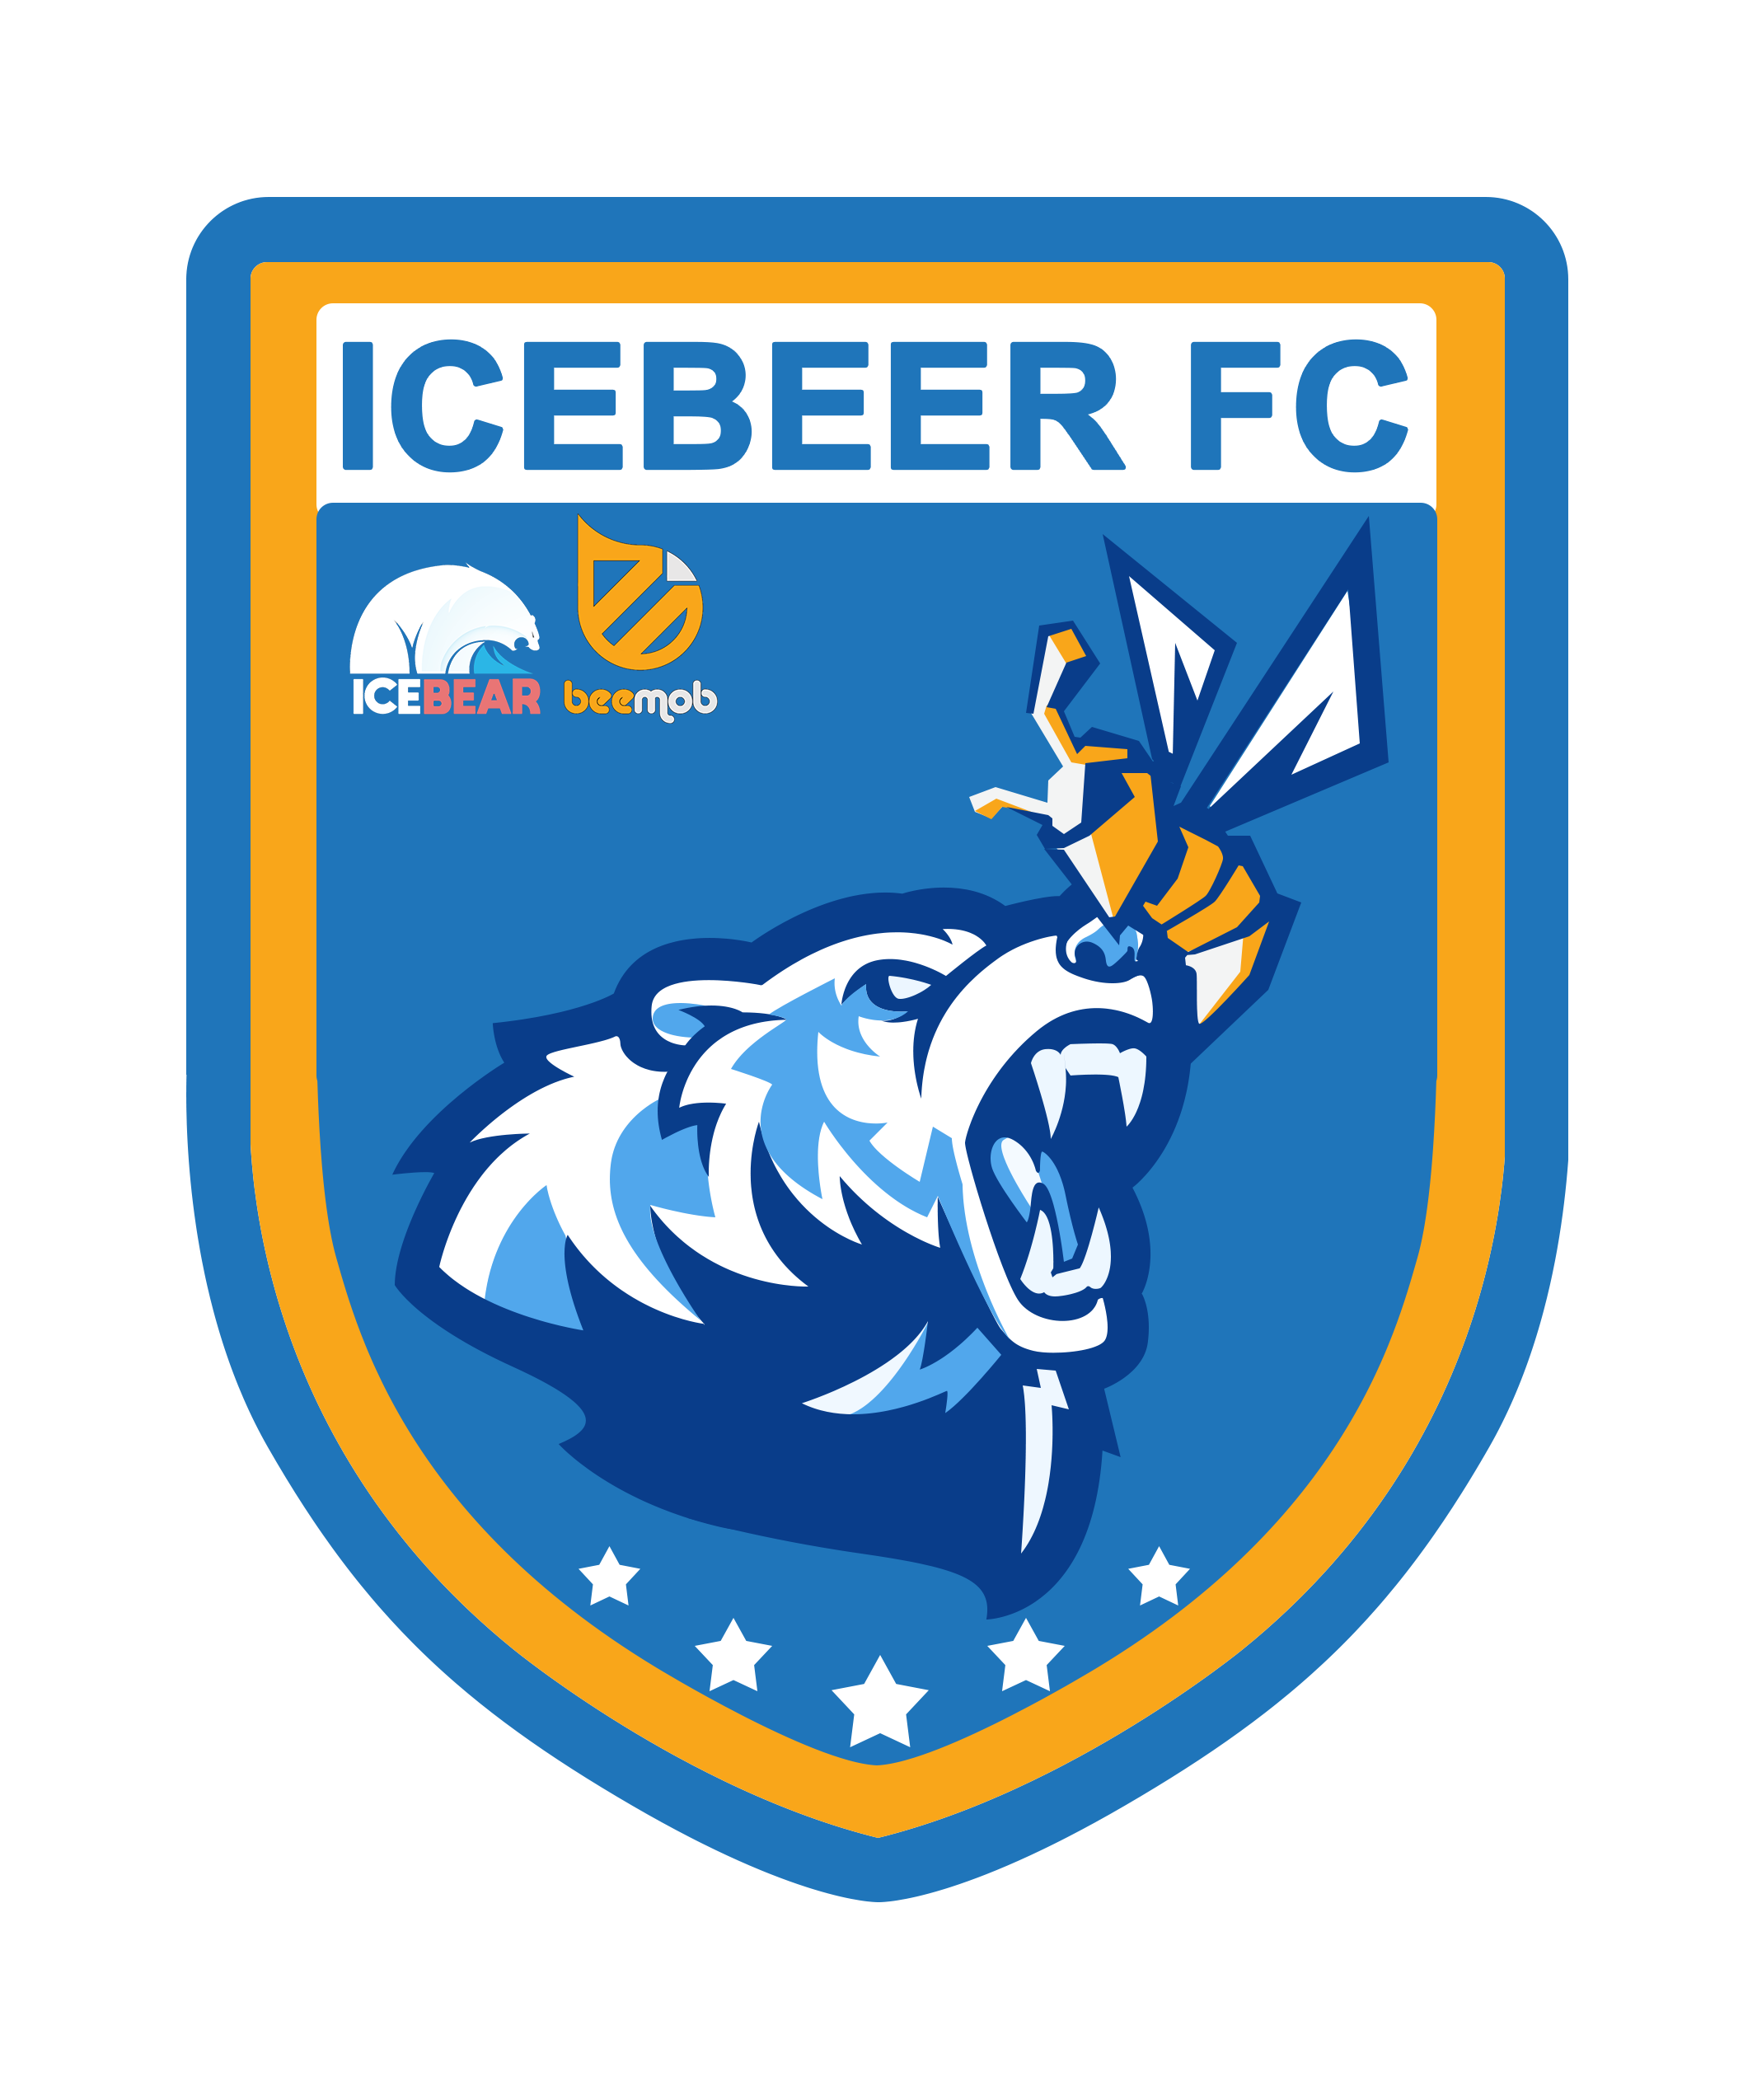 ICEBEER FC